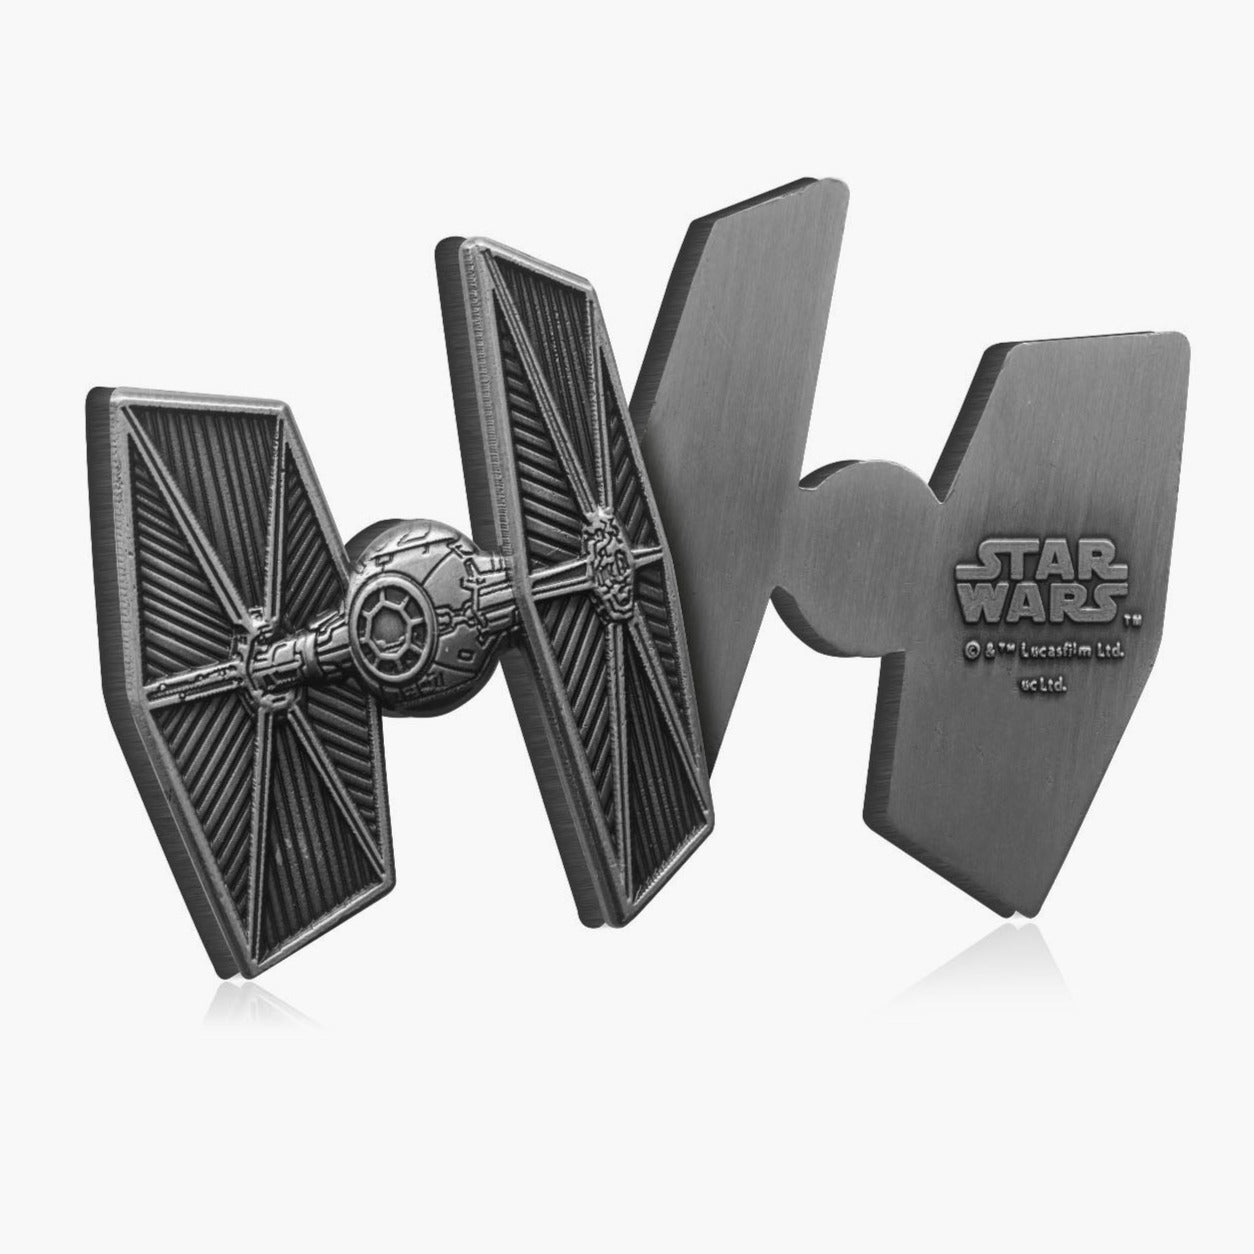 Official Star Wars Shaped Commemorative Bundle